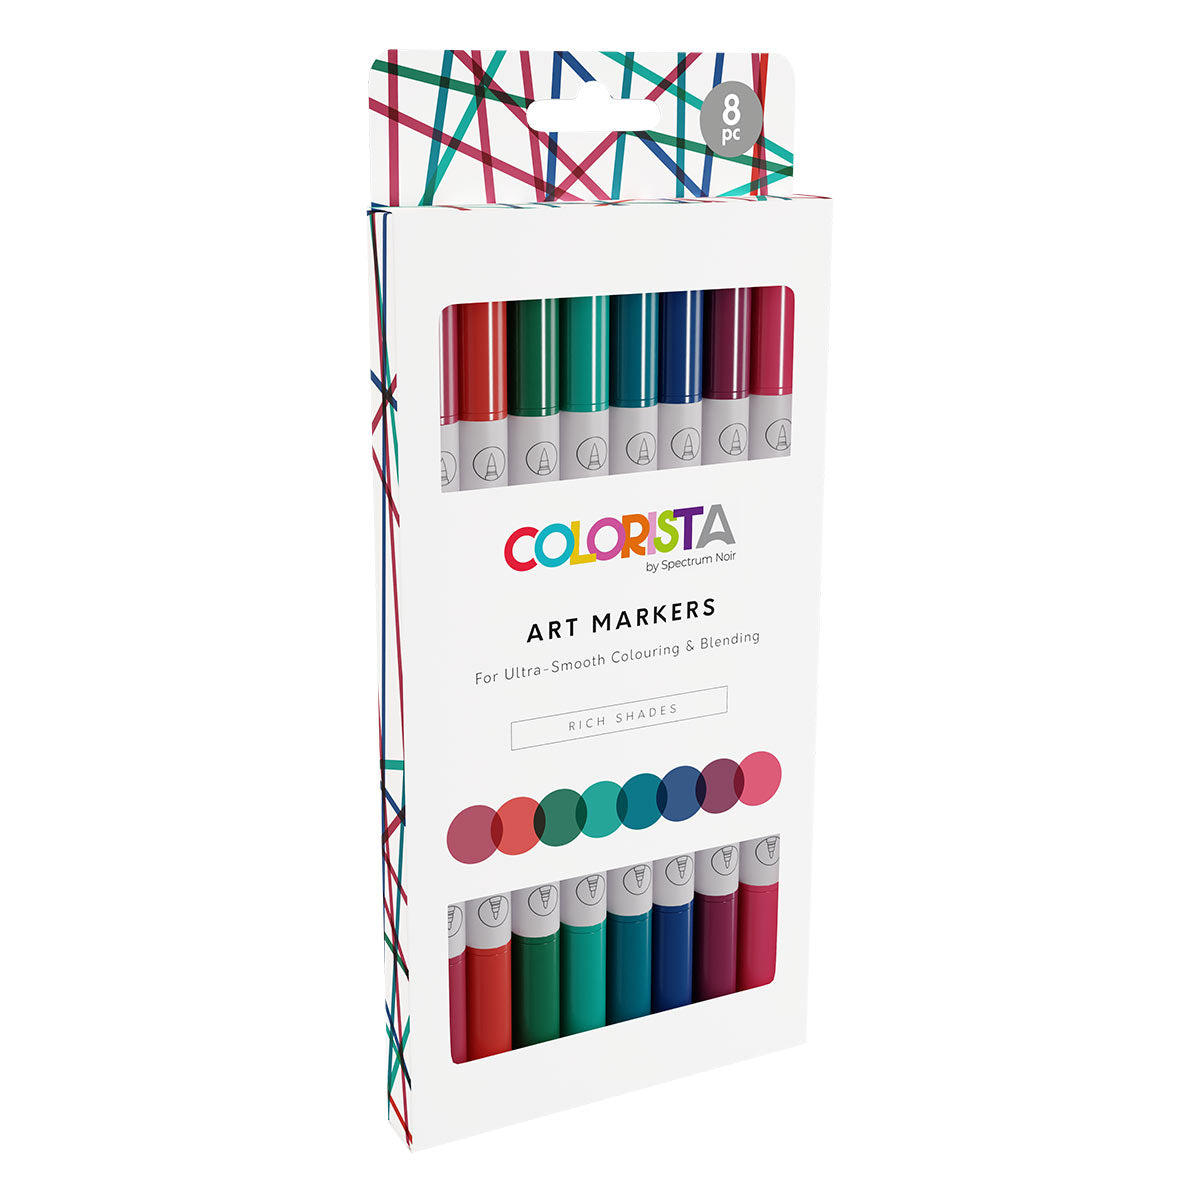 Spectrum Noir Colorista - Art Markers - Dual-tip Alcohol Brush Markers (8 set) - Rich shades